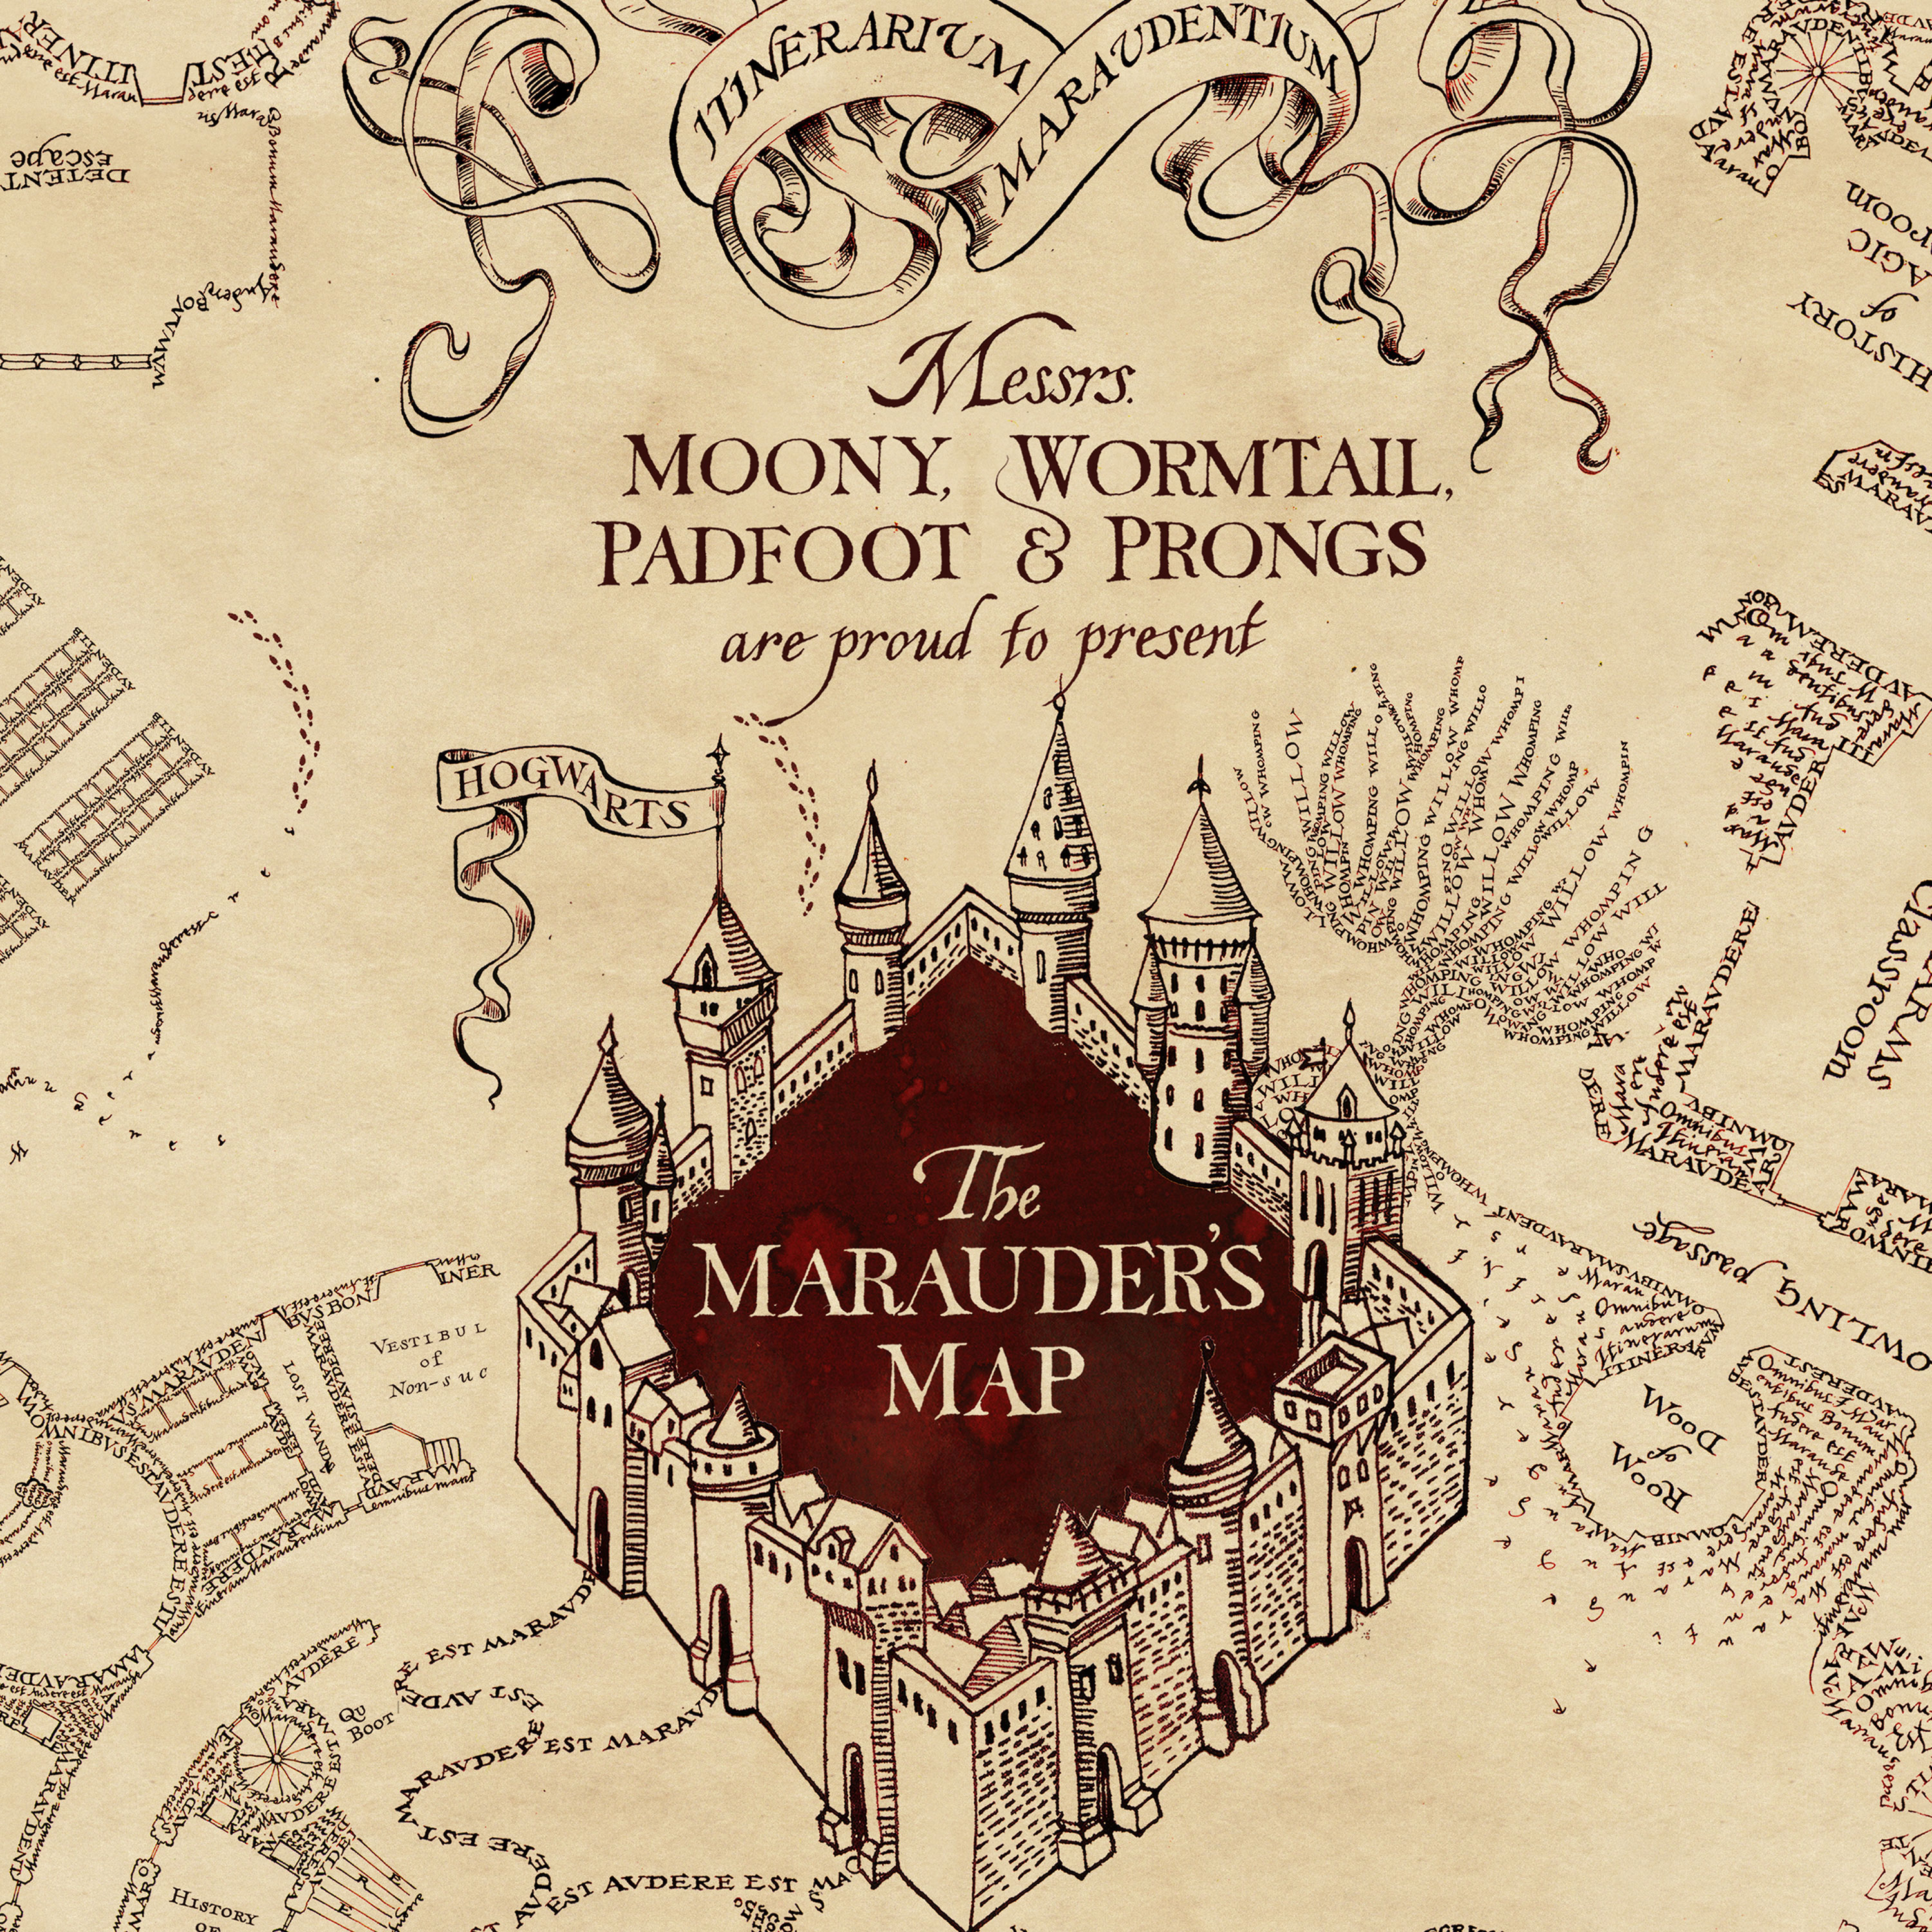 Harry Potter Wallpaper Marauders Map - 3000x3000 Wallpaper - teahub.io.